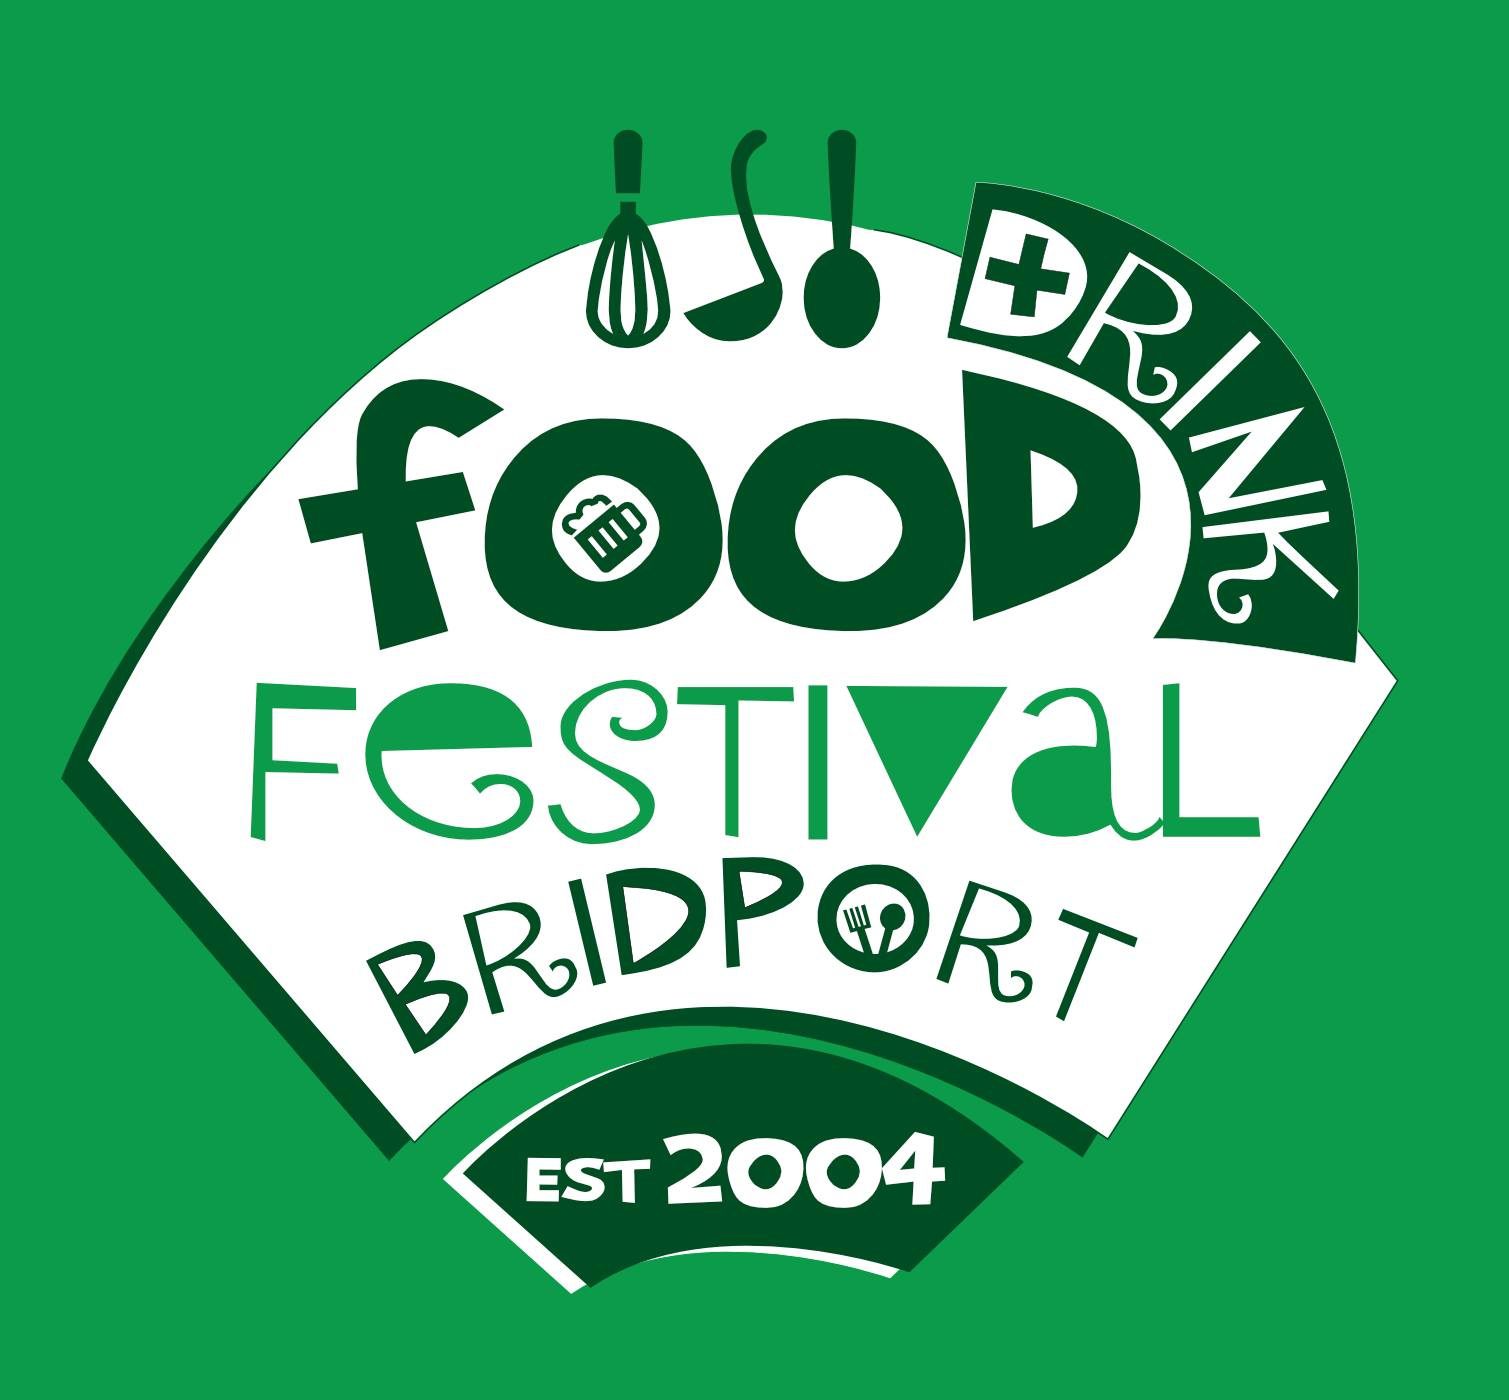 Bridport Food Festival Day Ticket (Saturday 15 June)